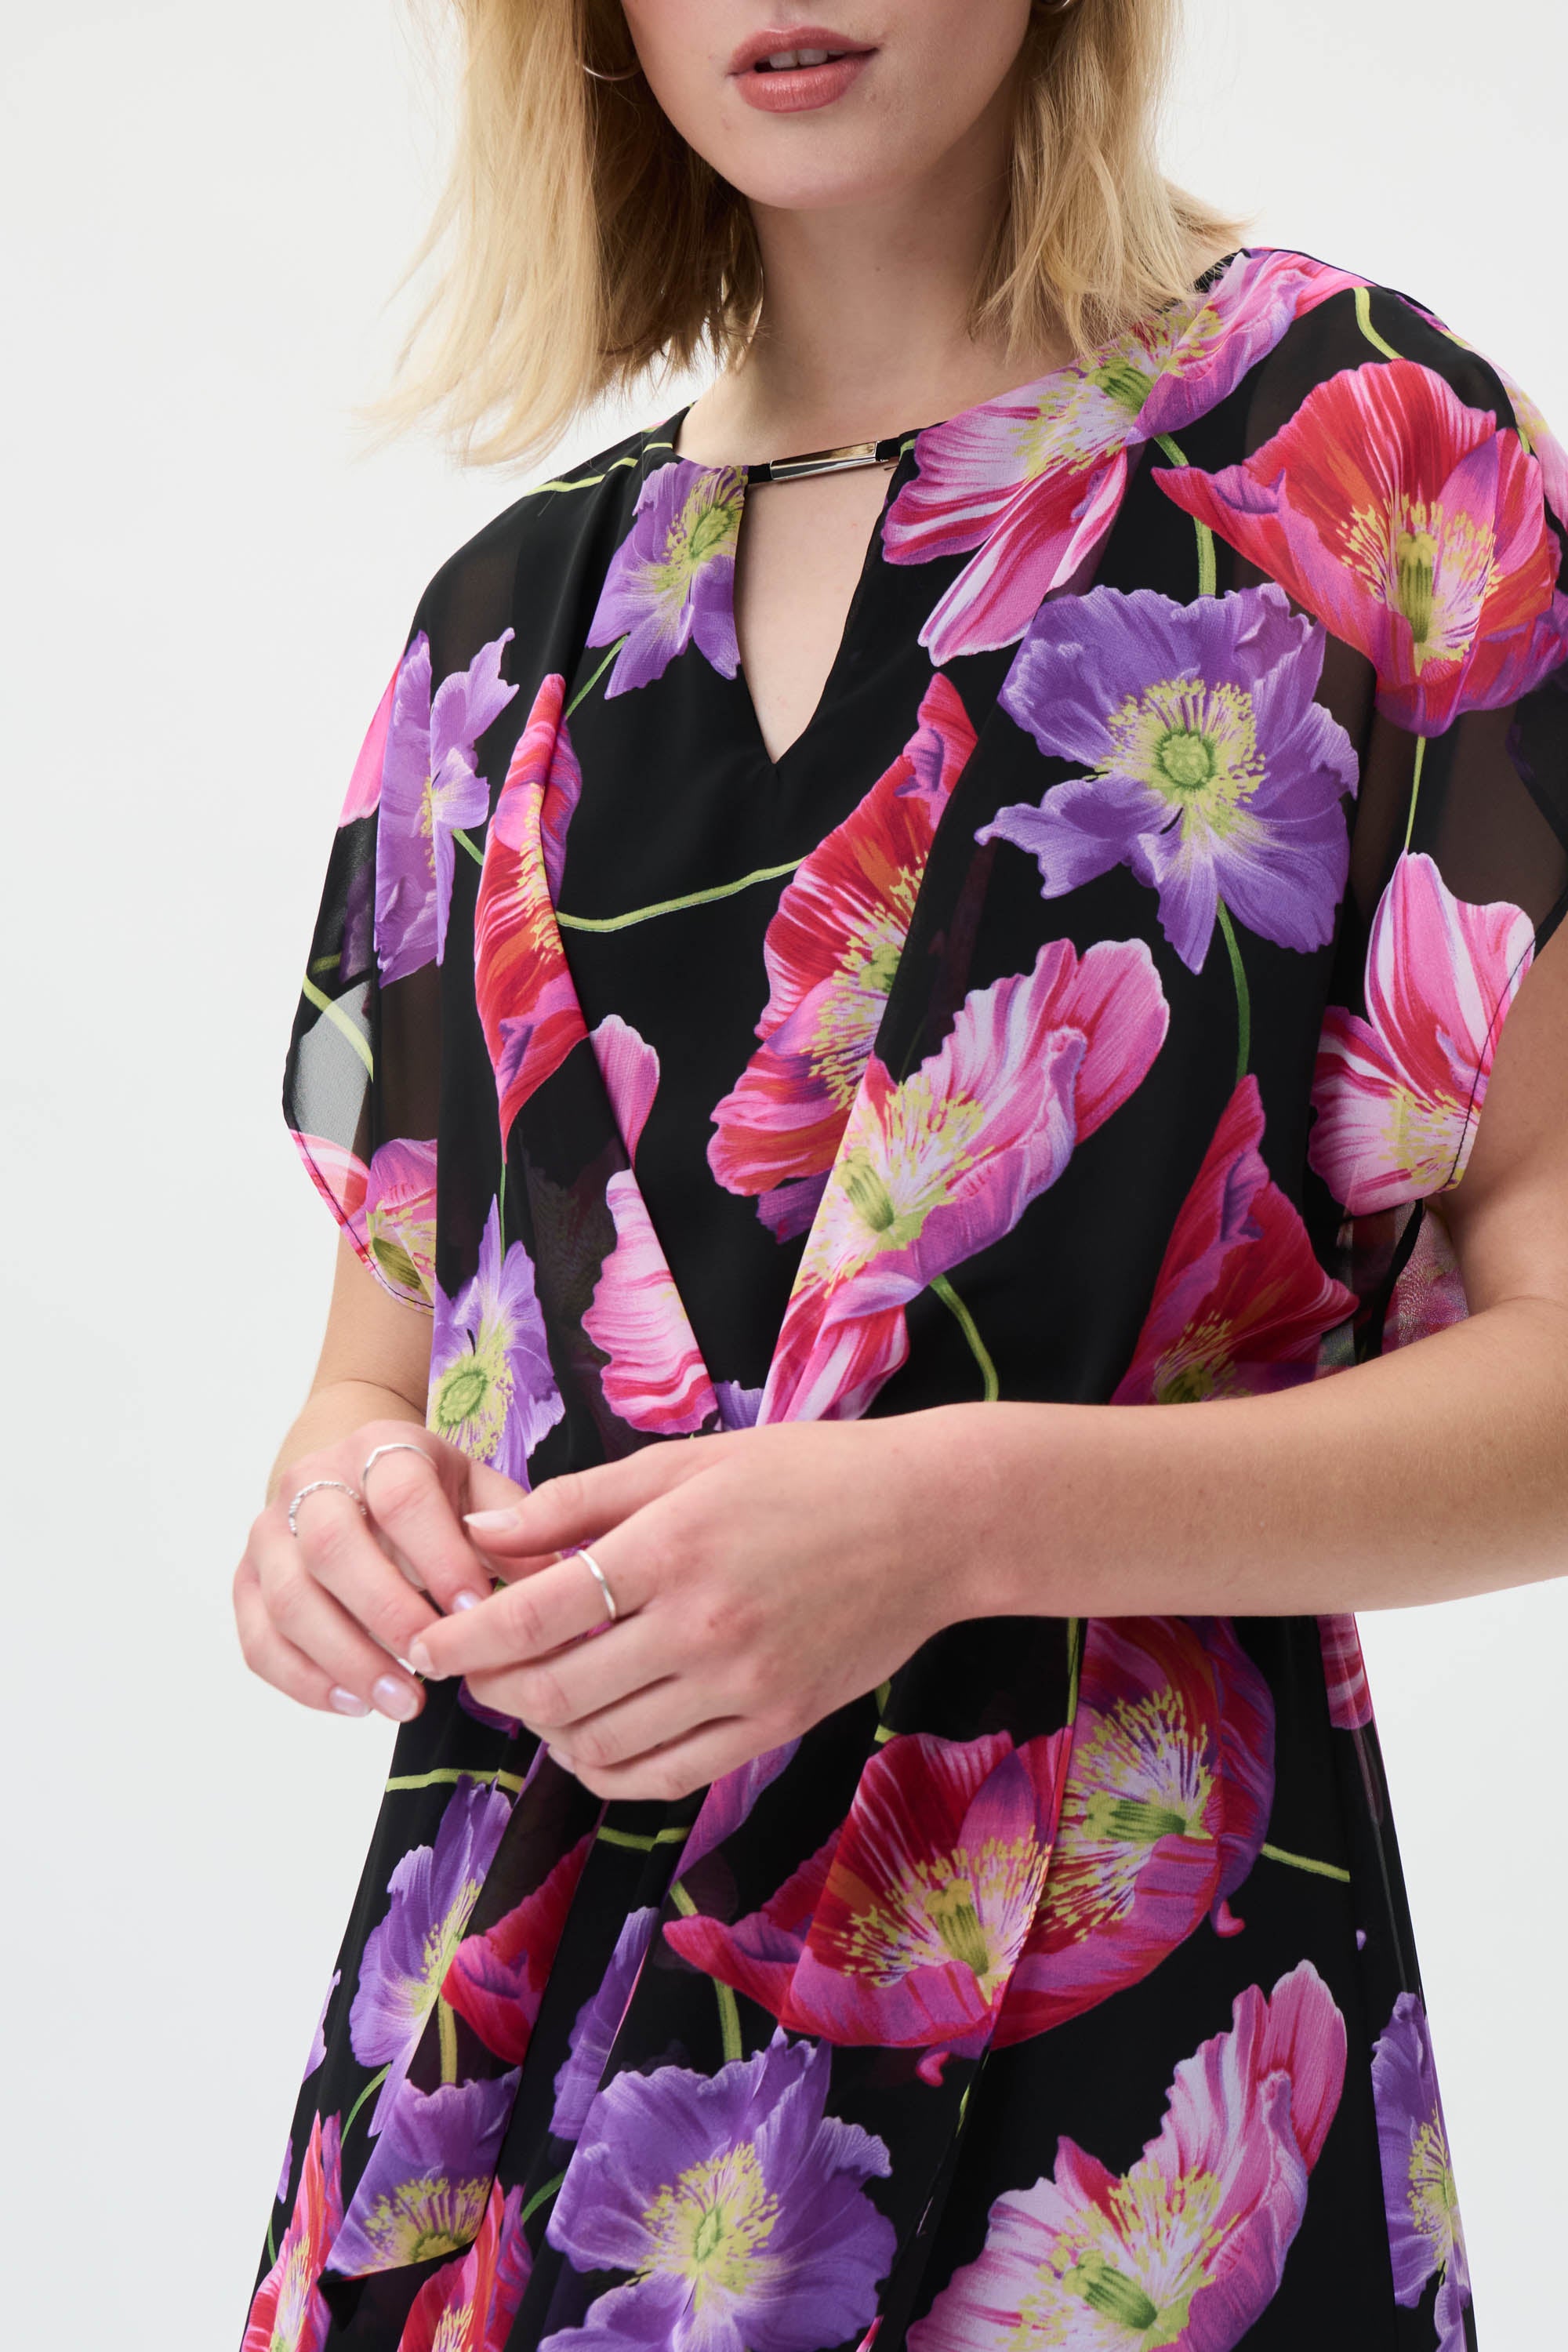 Floral Chiffon Dress 231106 - After Hours Boutique